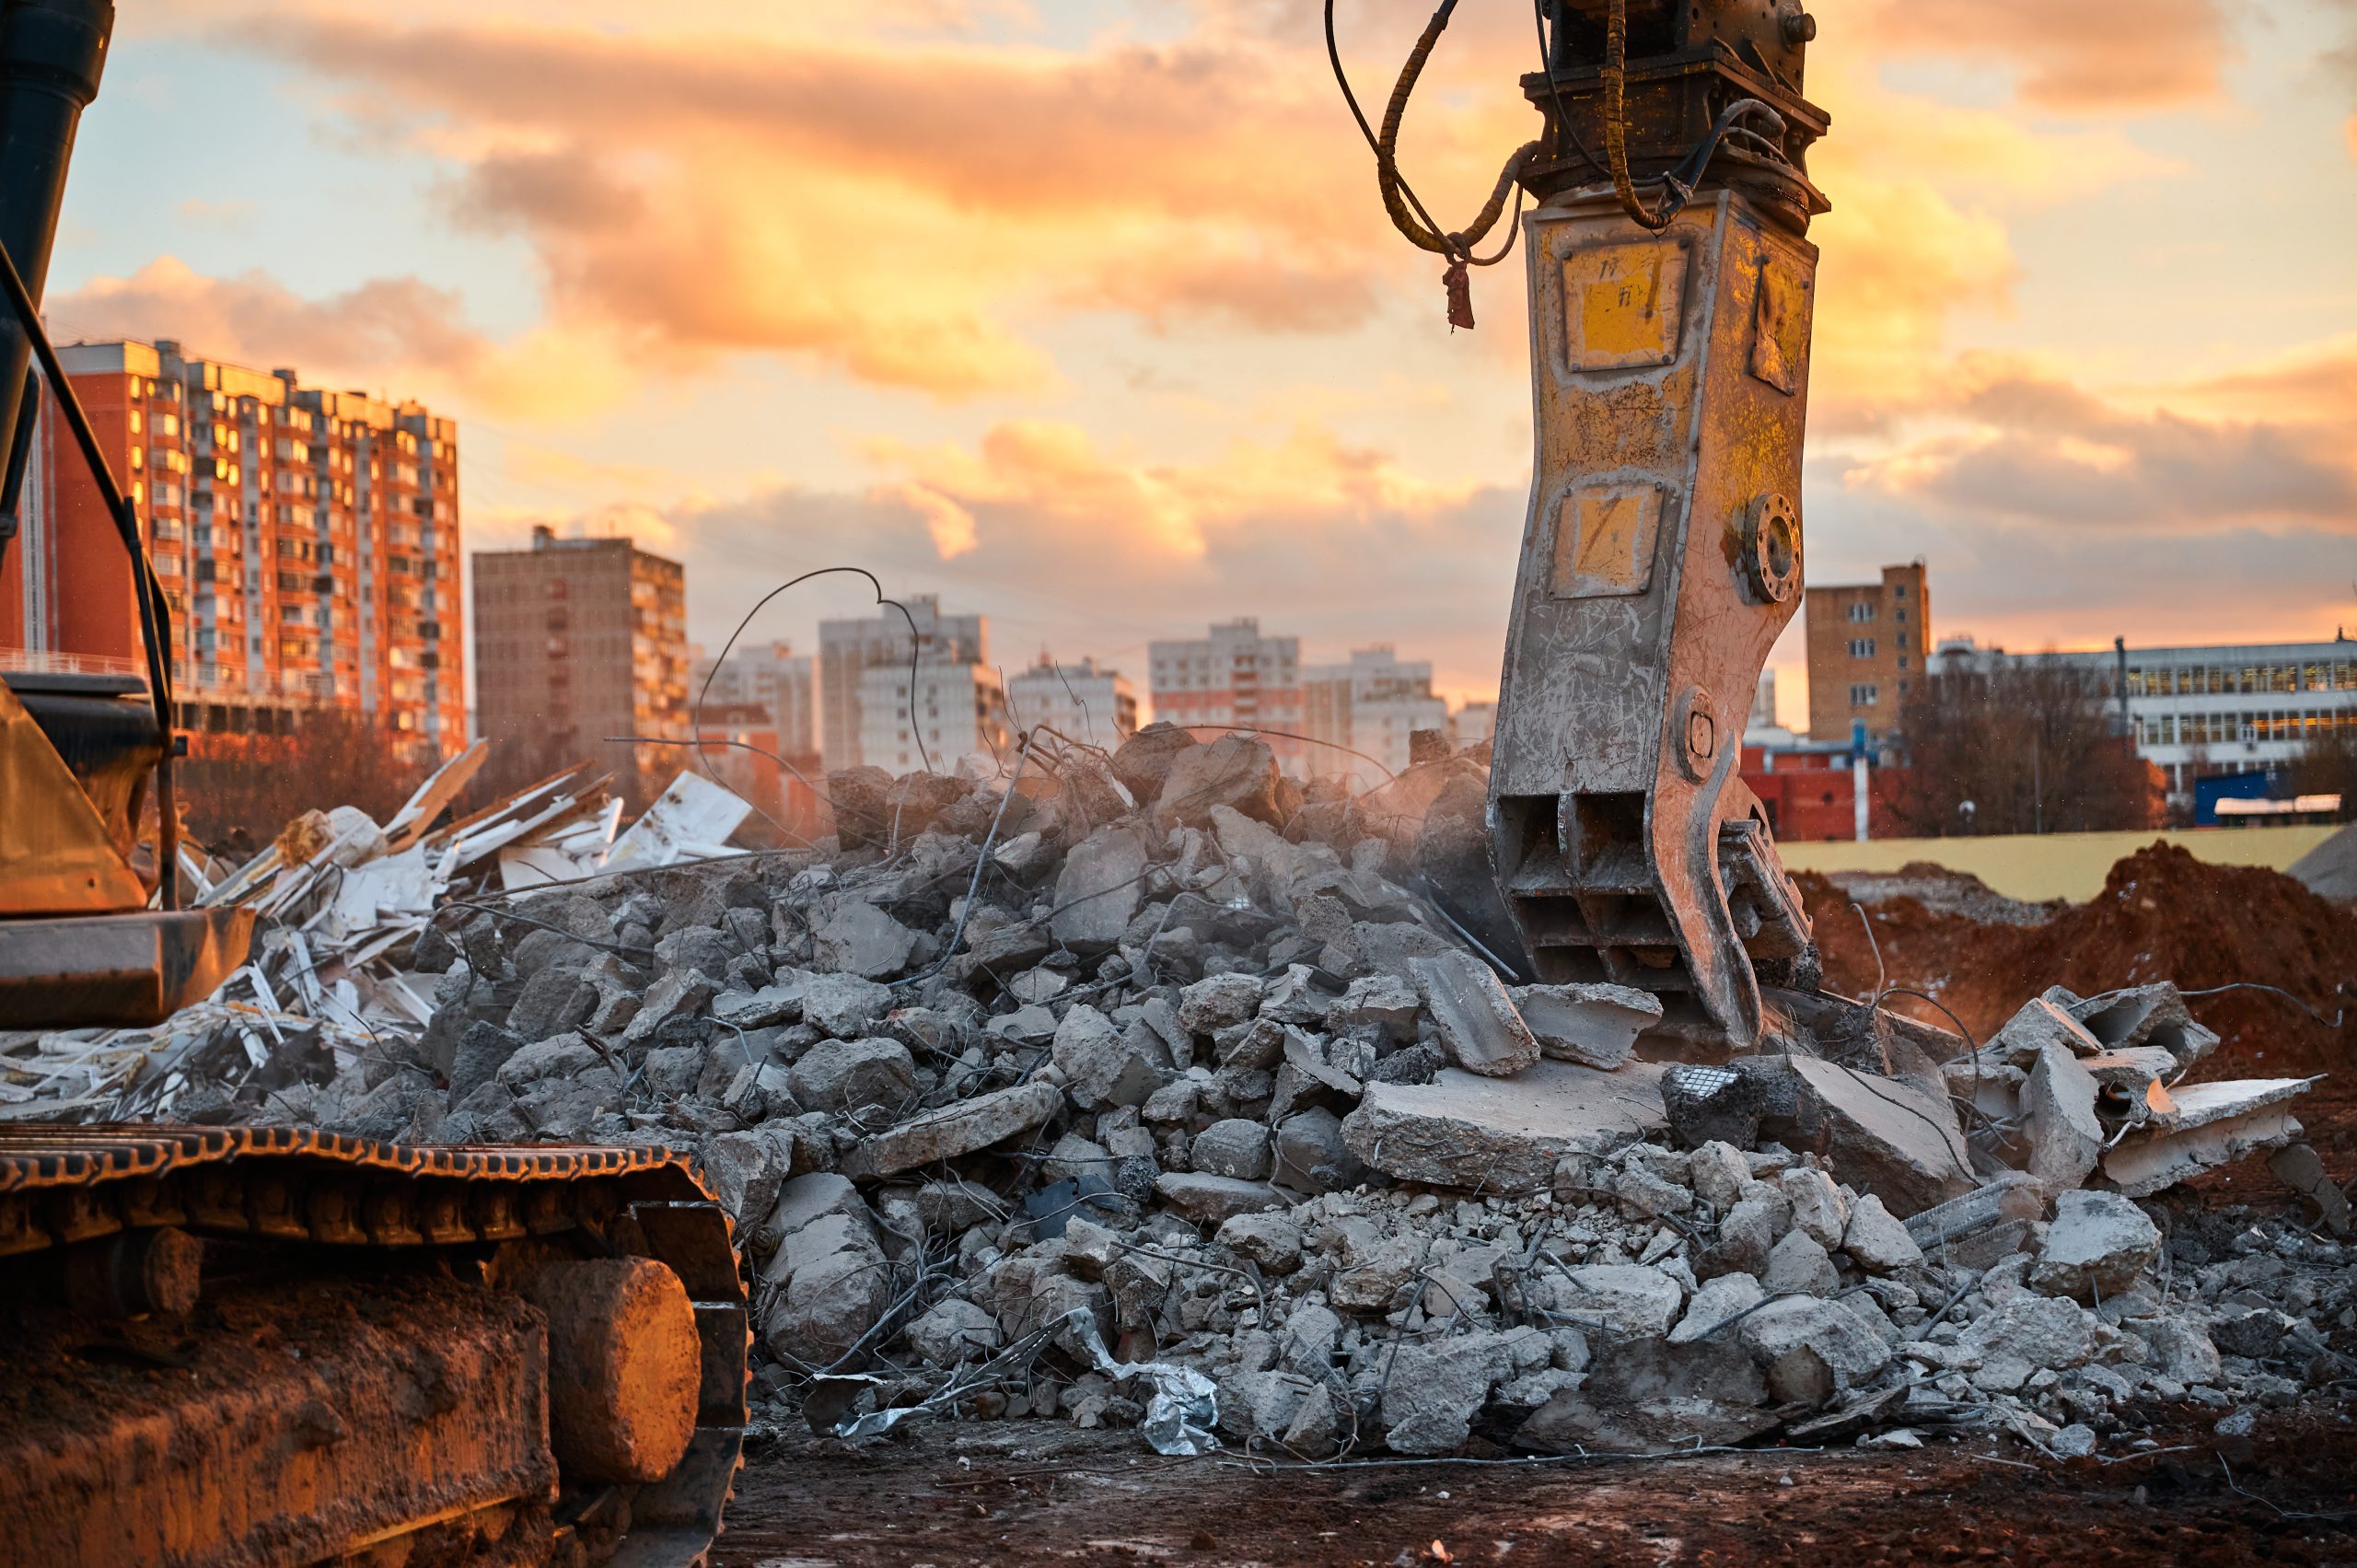 Crusher destroys reinforced concrete at demolition site